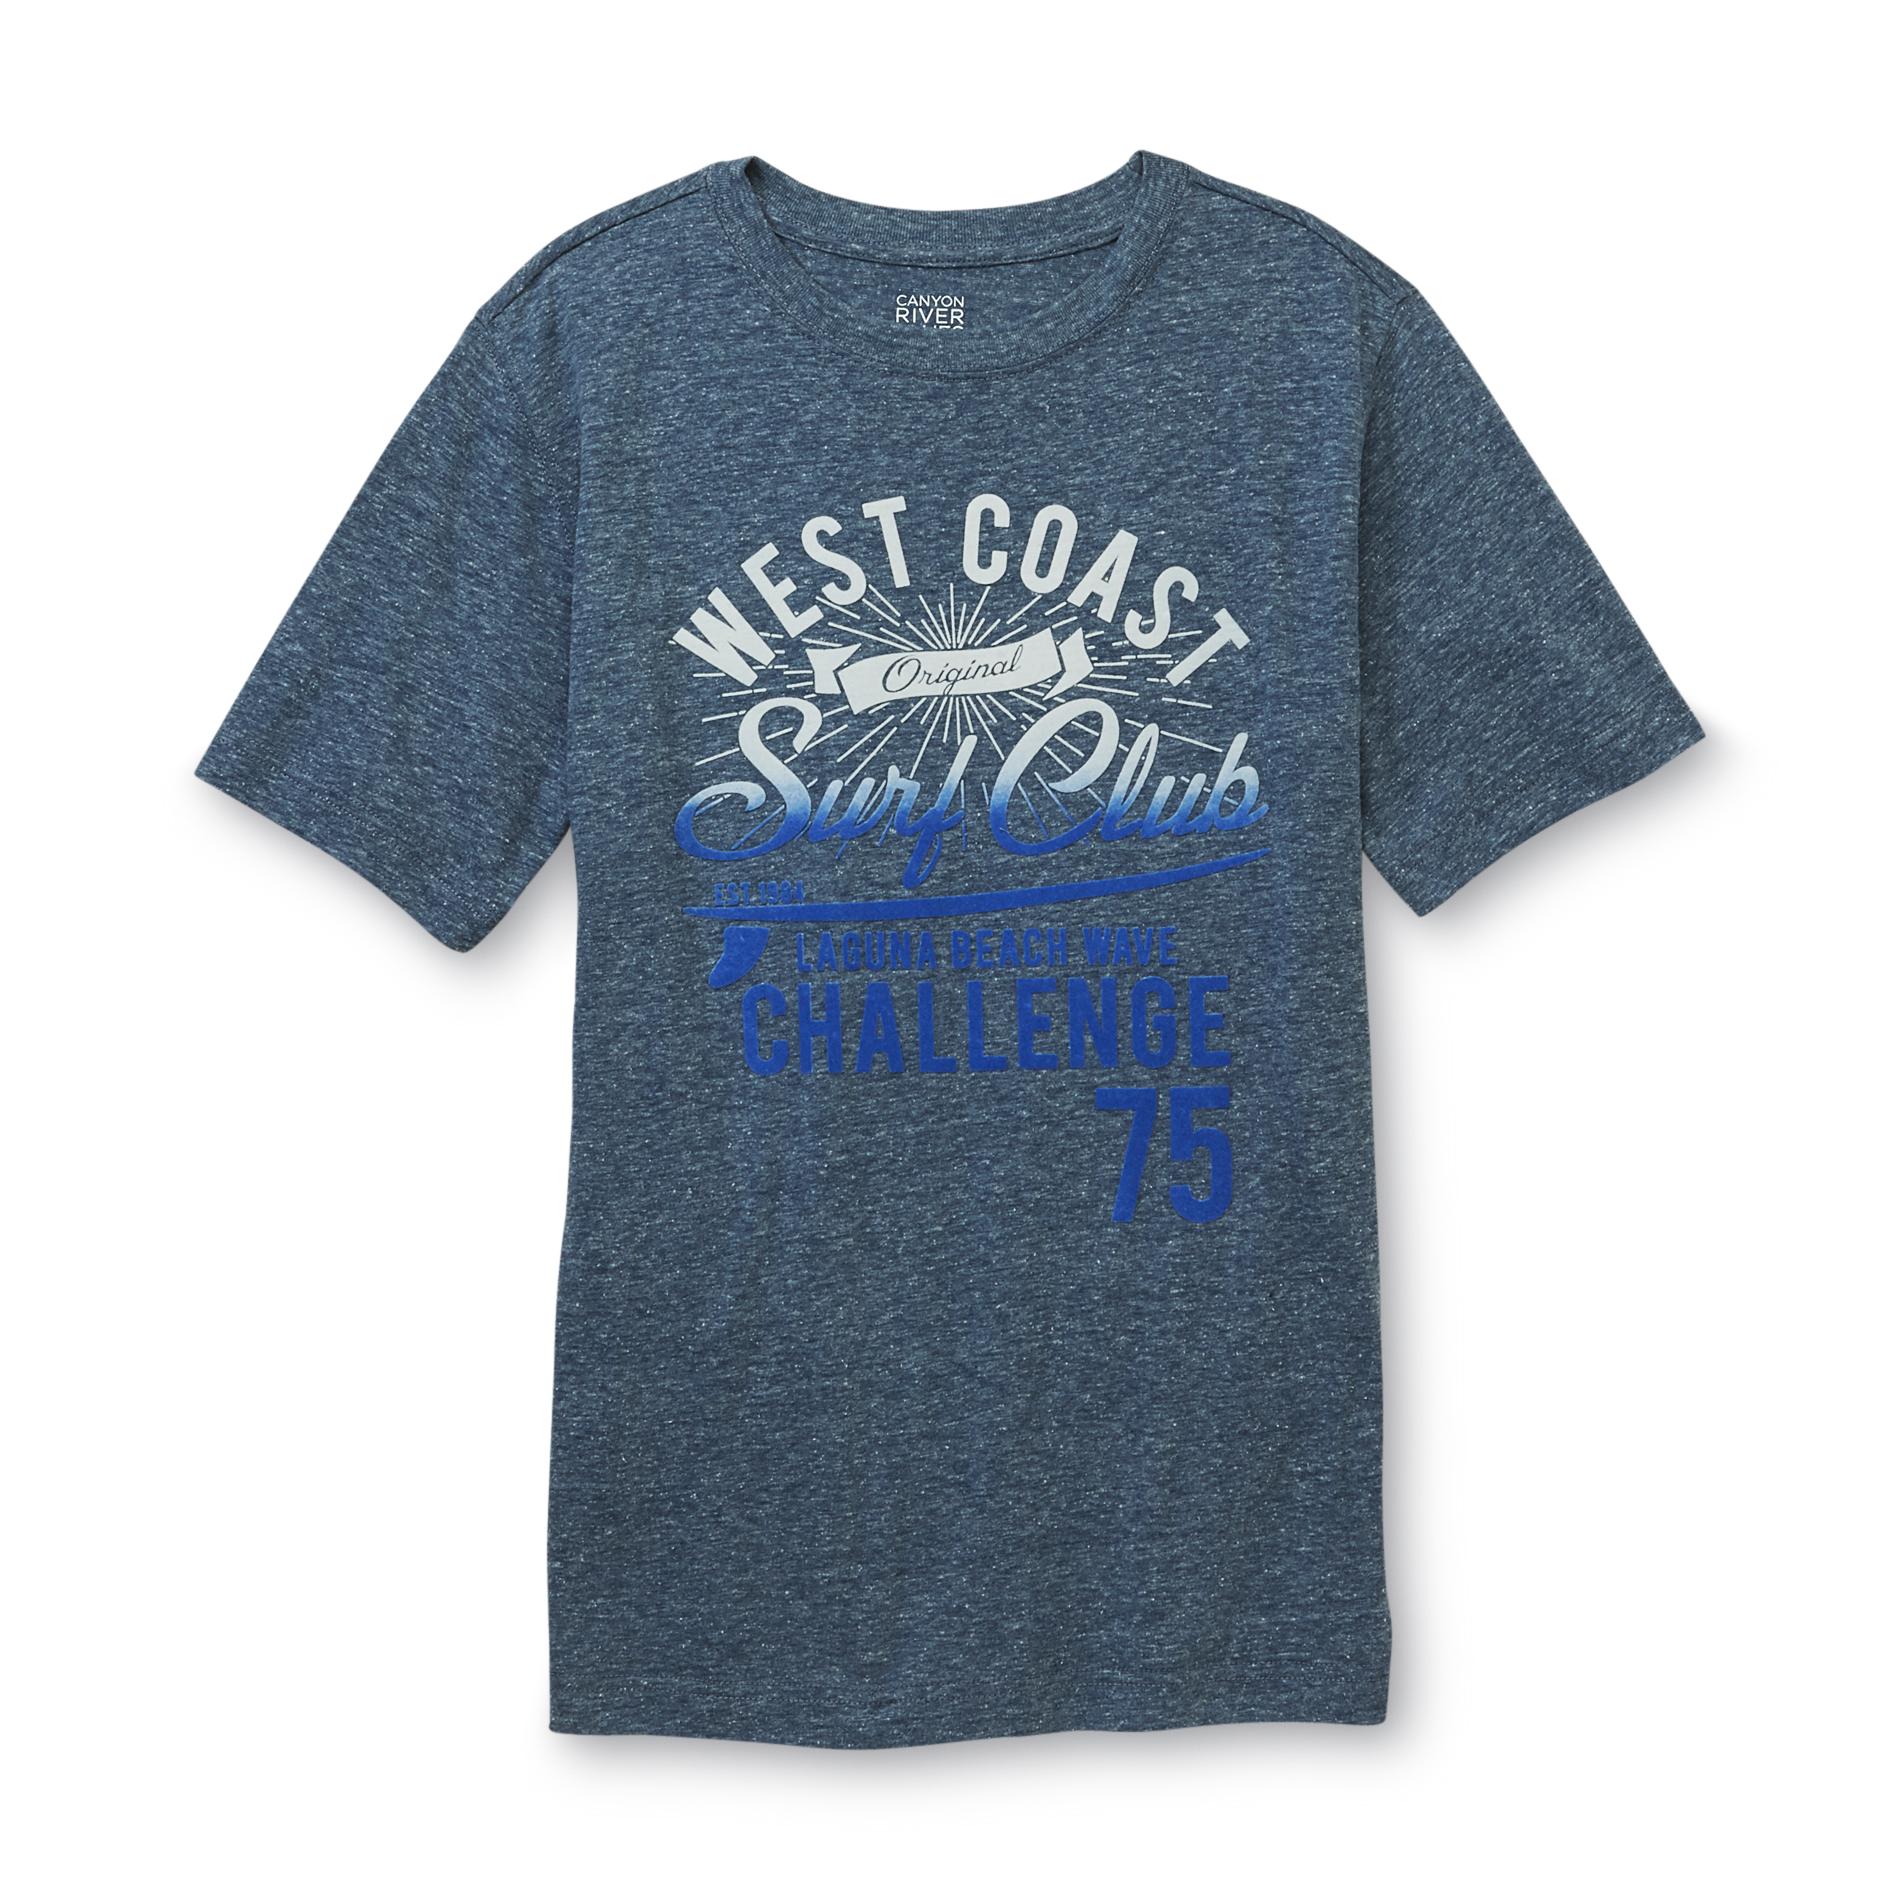 Canyon River Blues Boy's Graphic T-Shirt - Surf Club